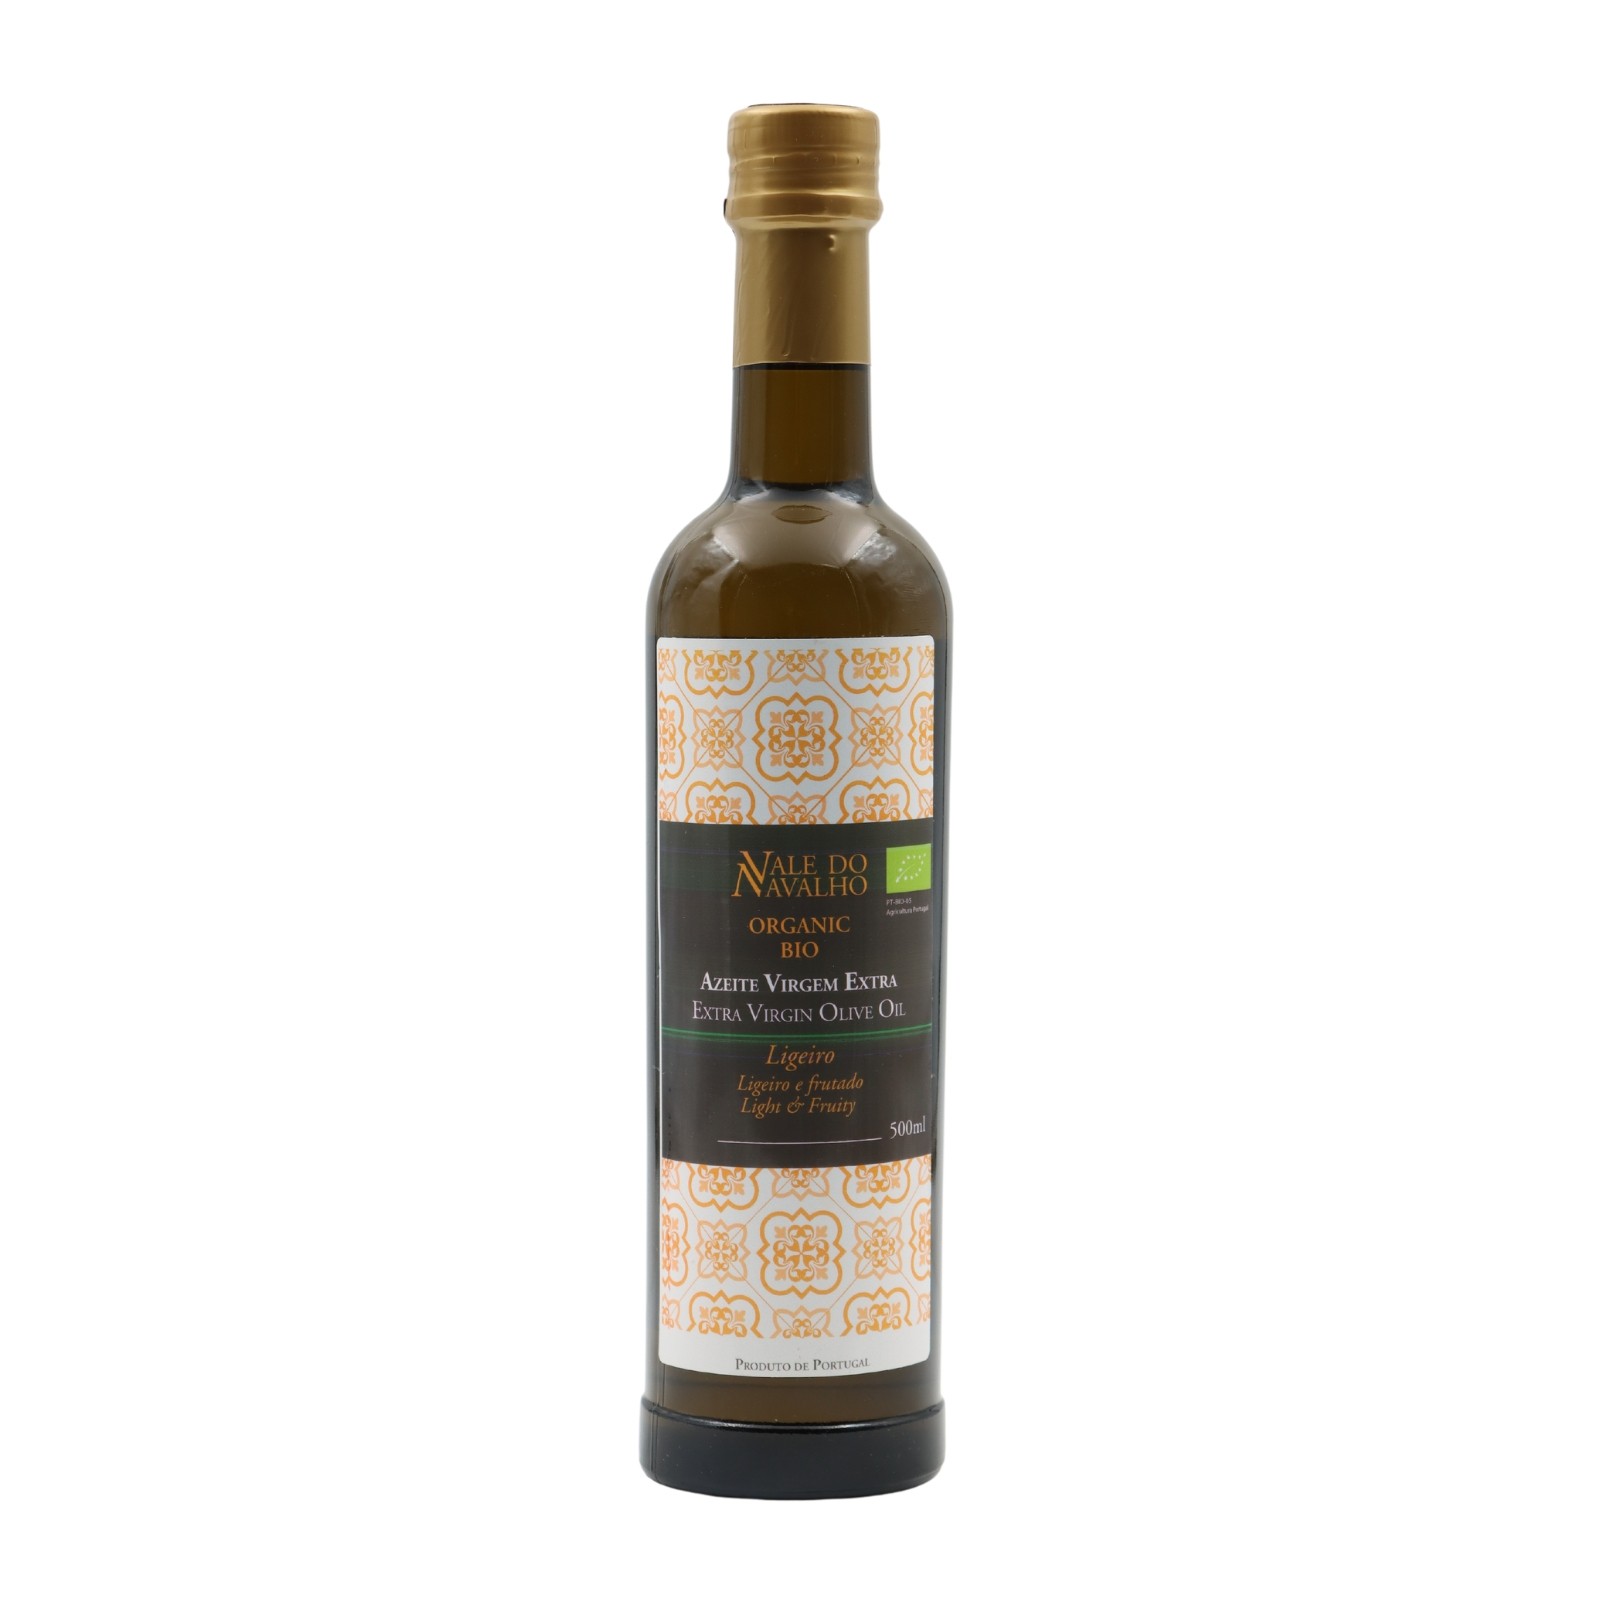 Vale do Navalho Light Extra Virgin Olive Oil